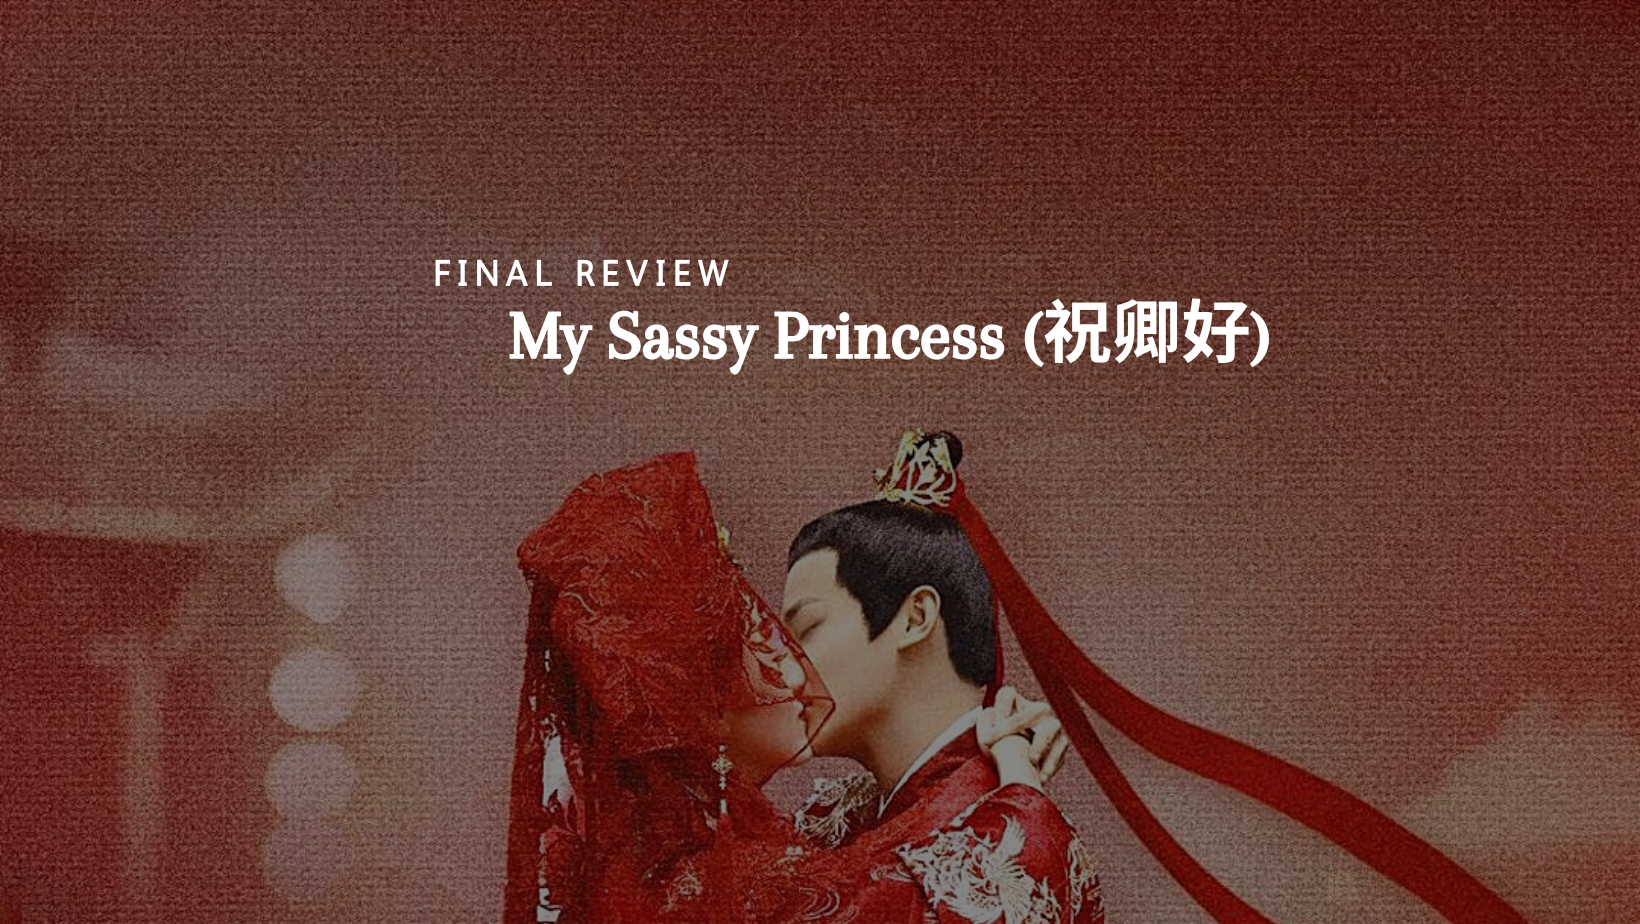 Drama Review: My Sassy Princess (祝卿好)